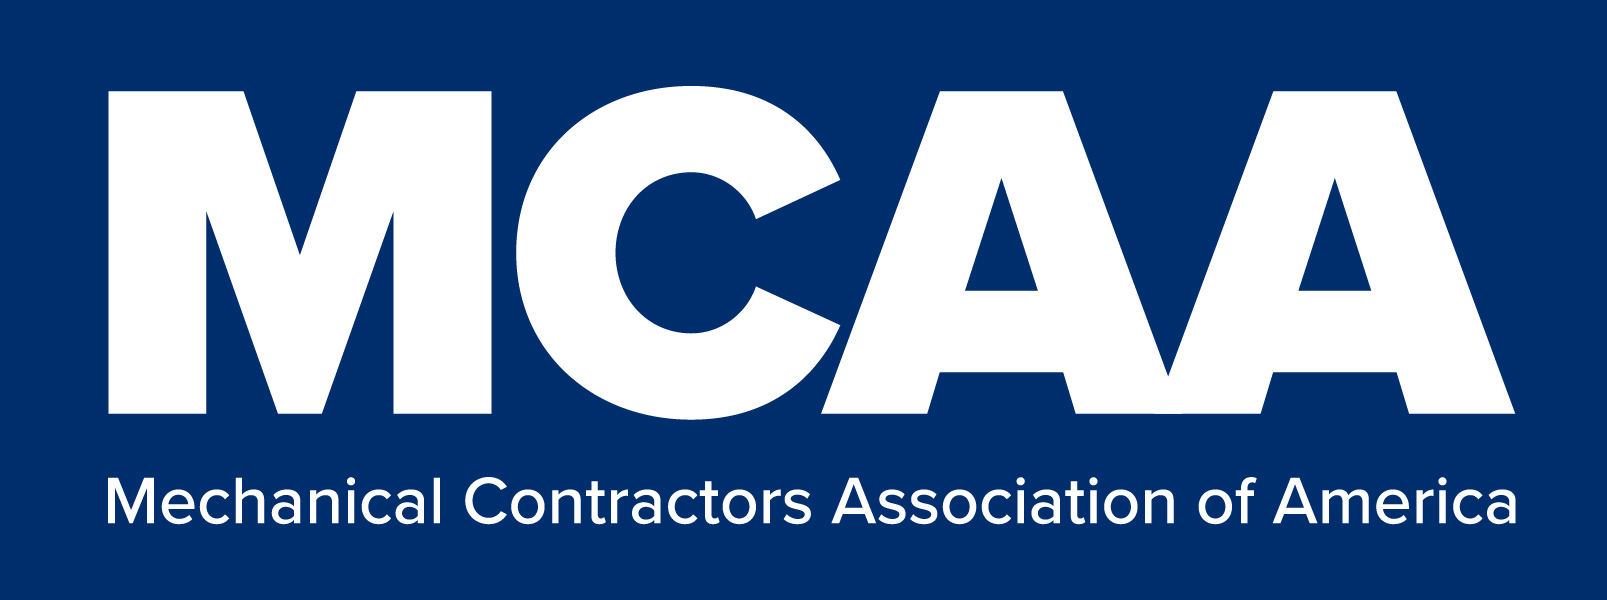 MCAA-Logo.jpg